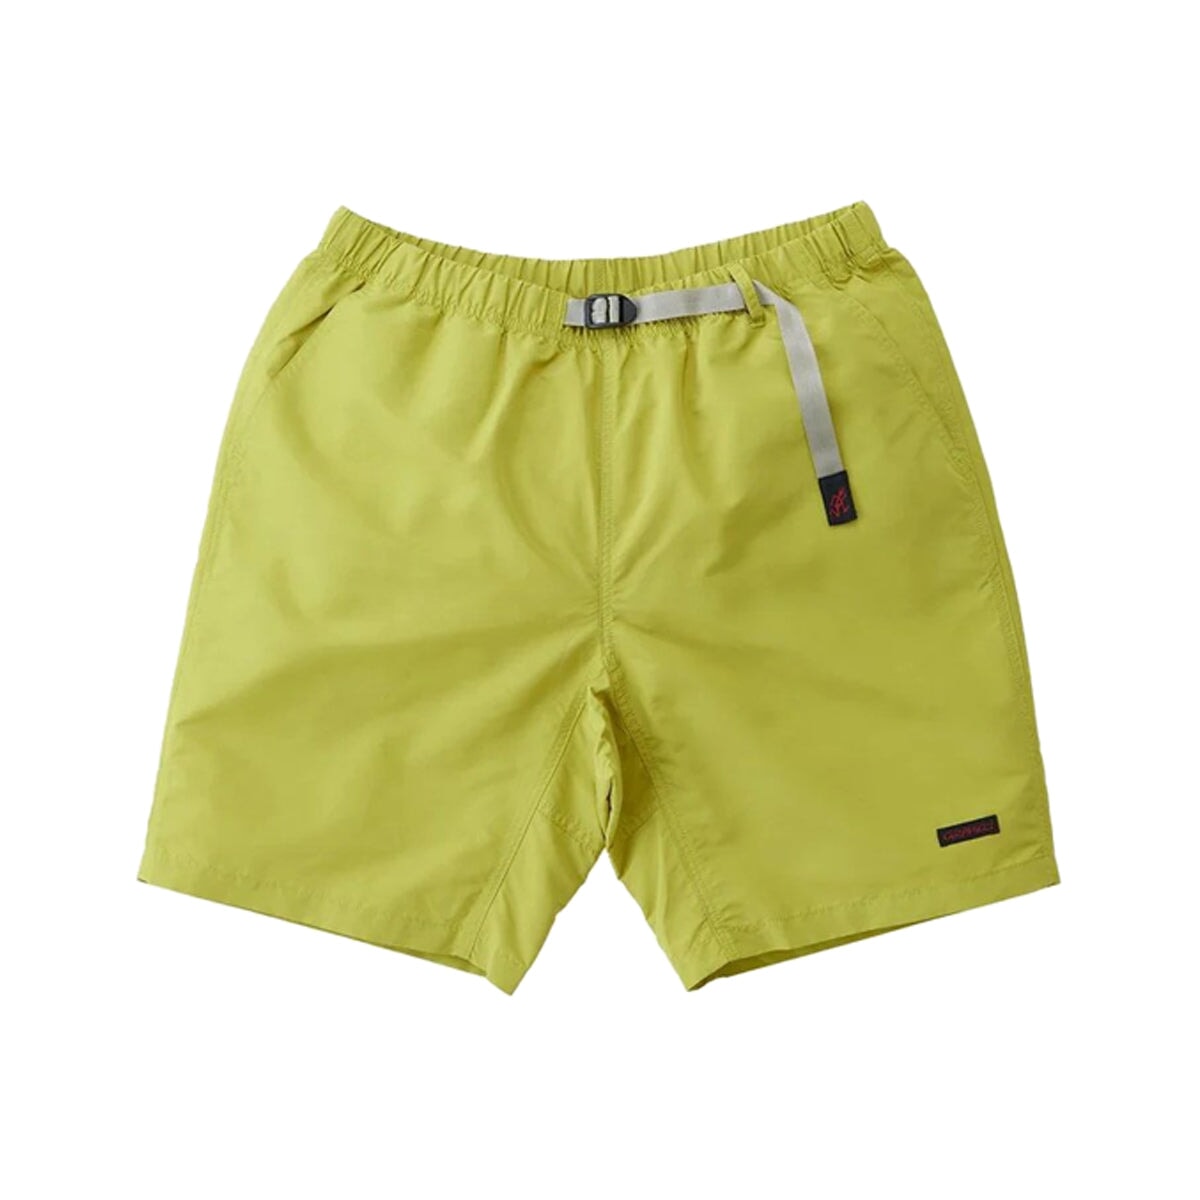 Gramicci Shell Packable Shorts - Foggy Lime Shorts Gramicci 